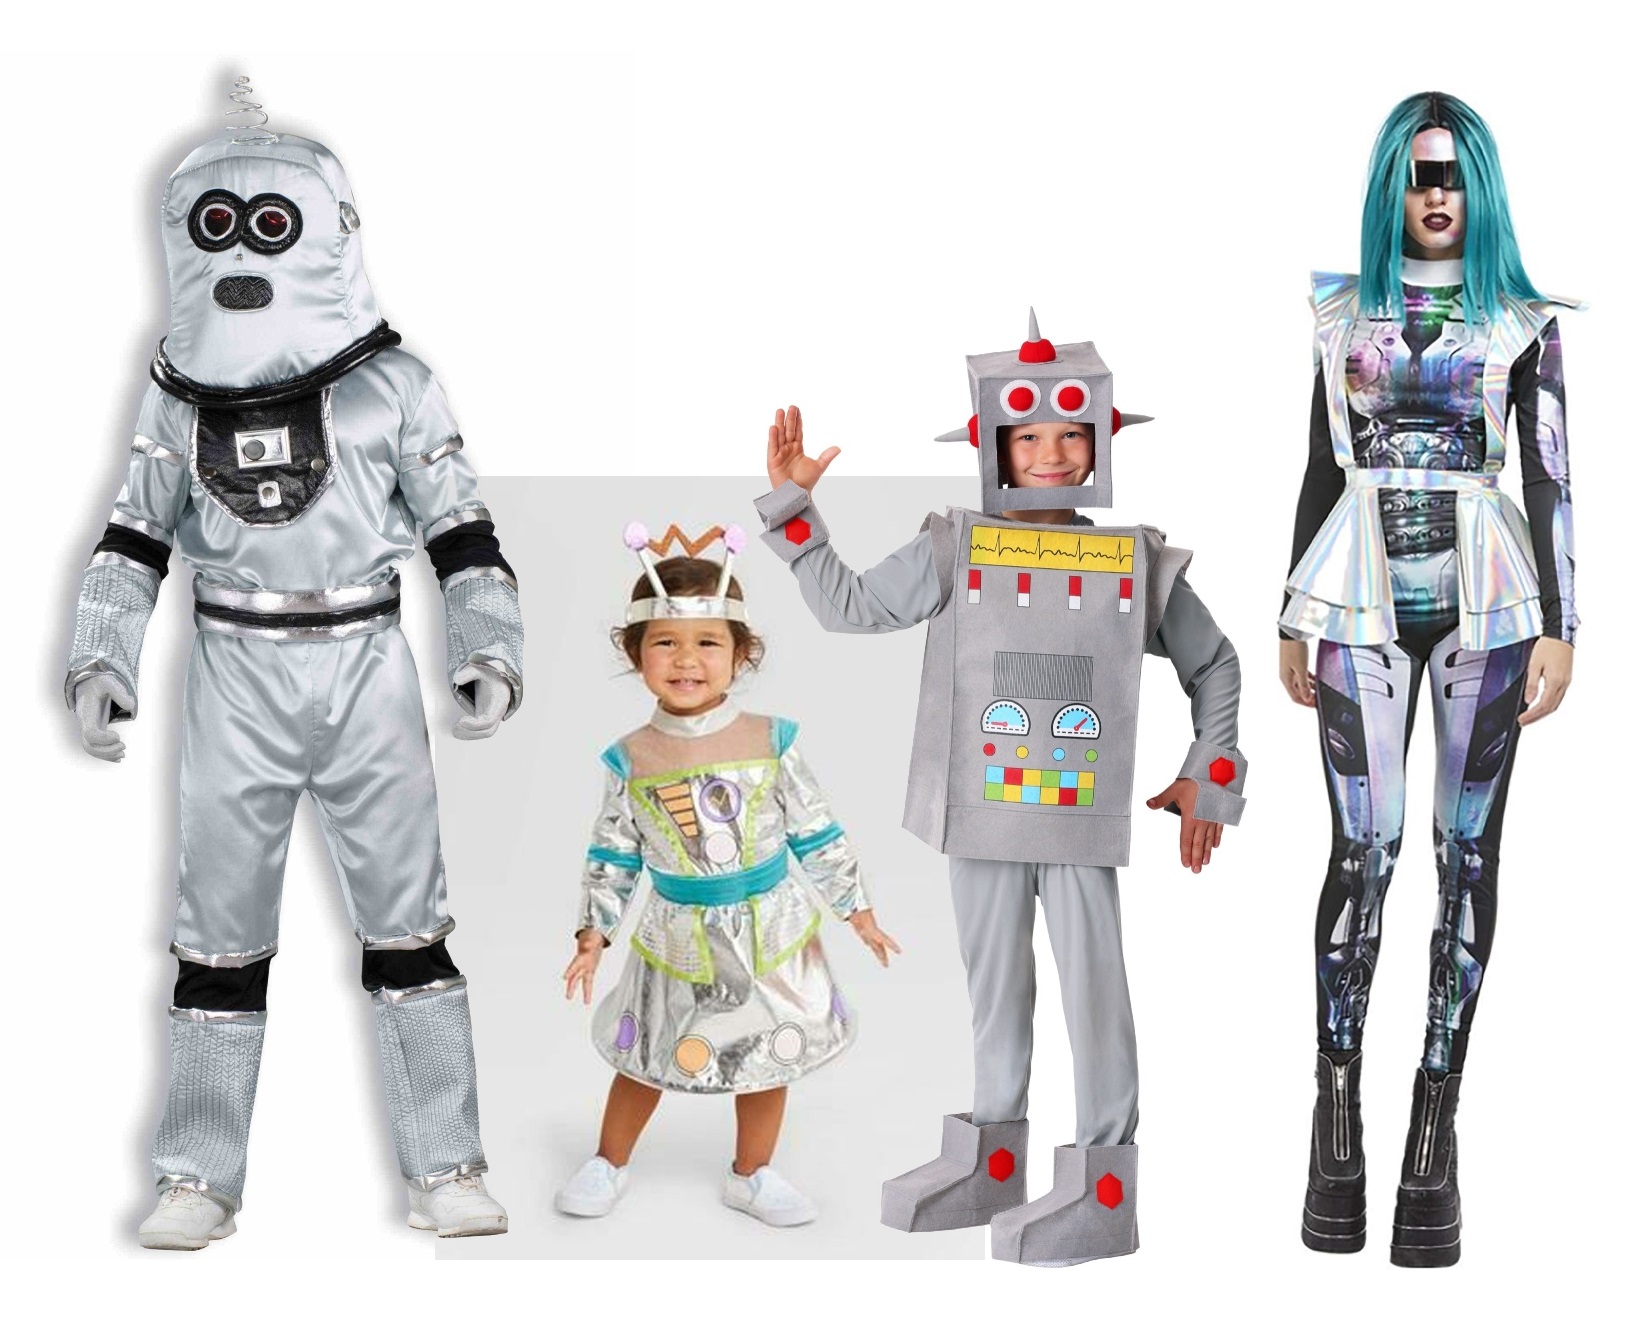 Robot Costumes